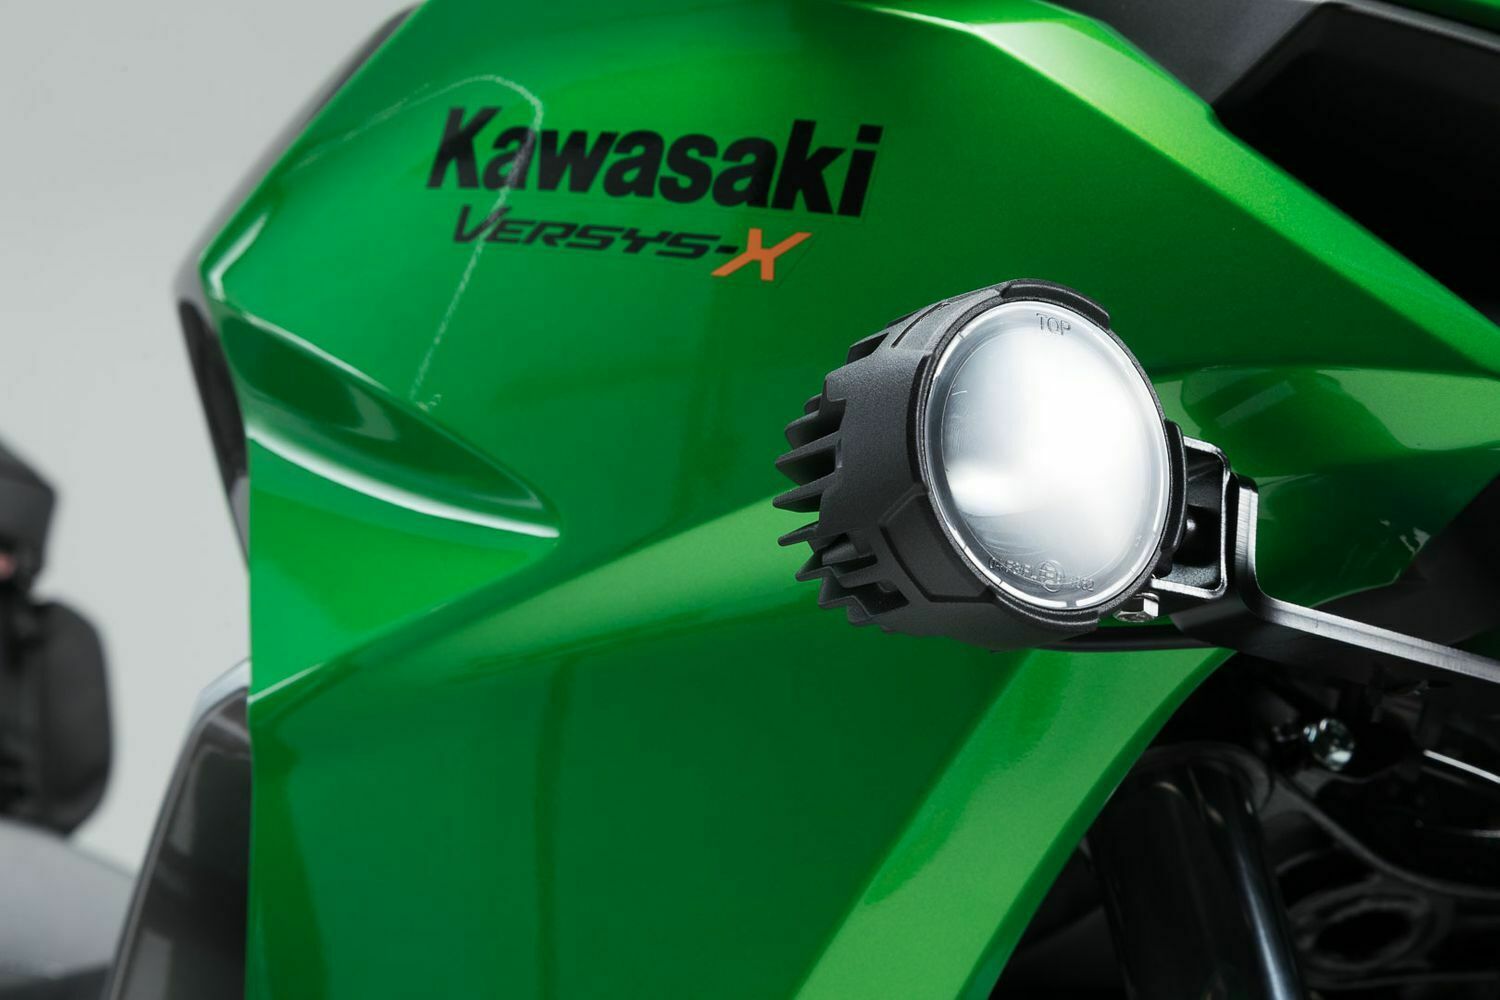 SW Motech Soporte Neblineros Kawasaki Versys 300 (2017)